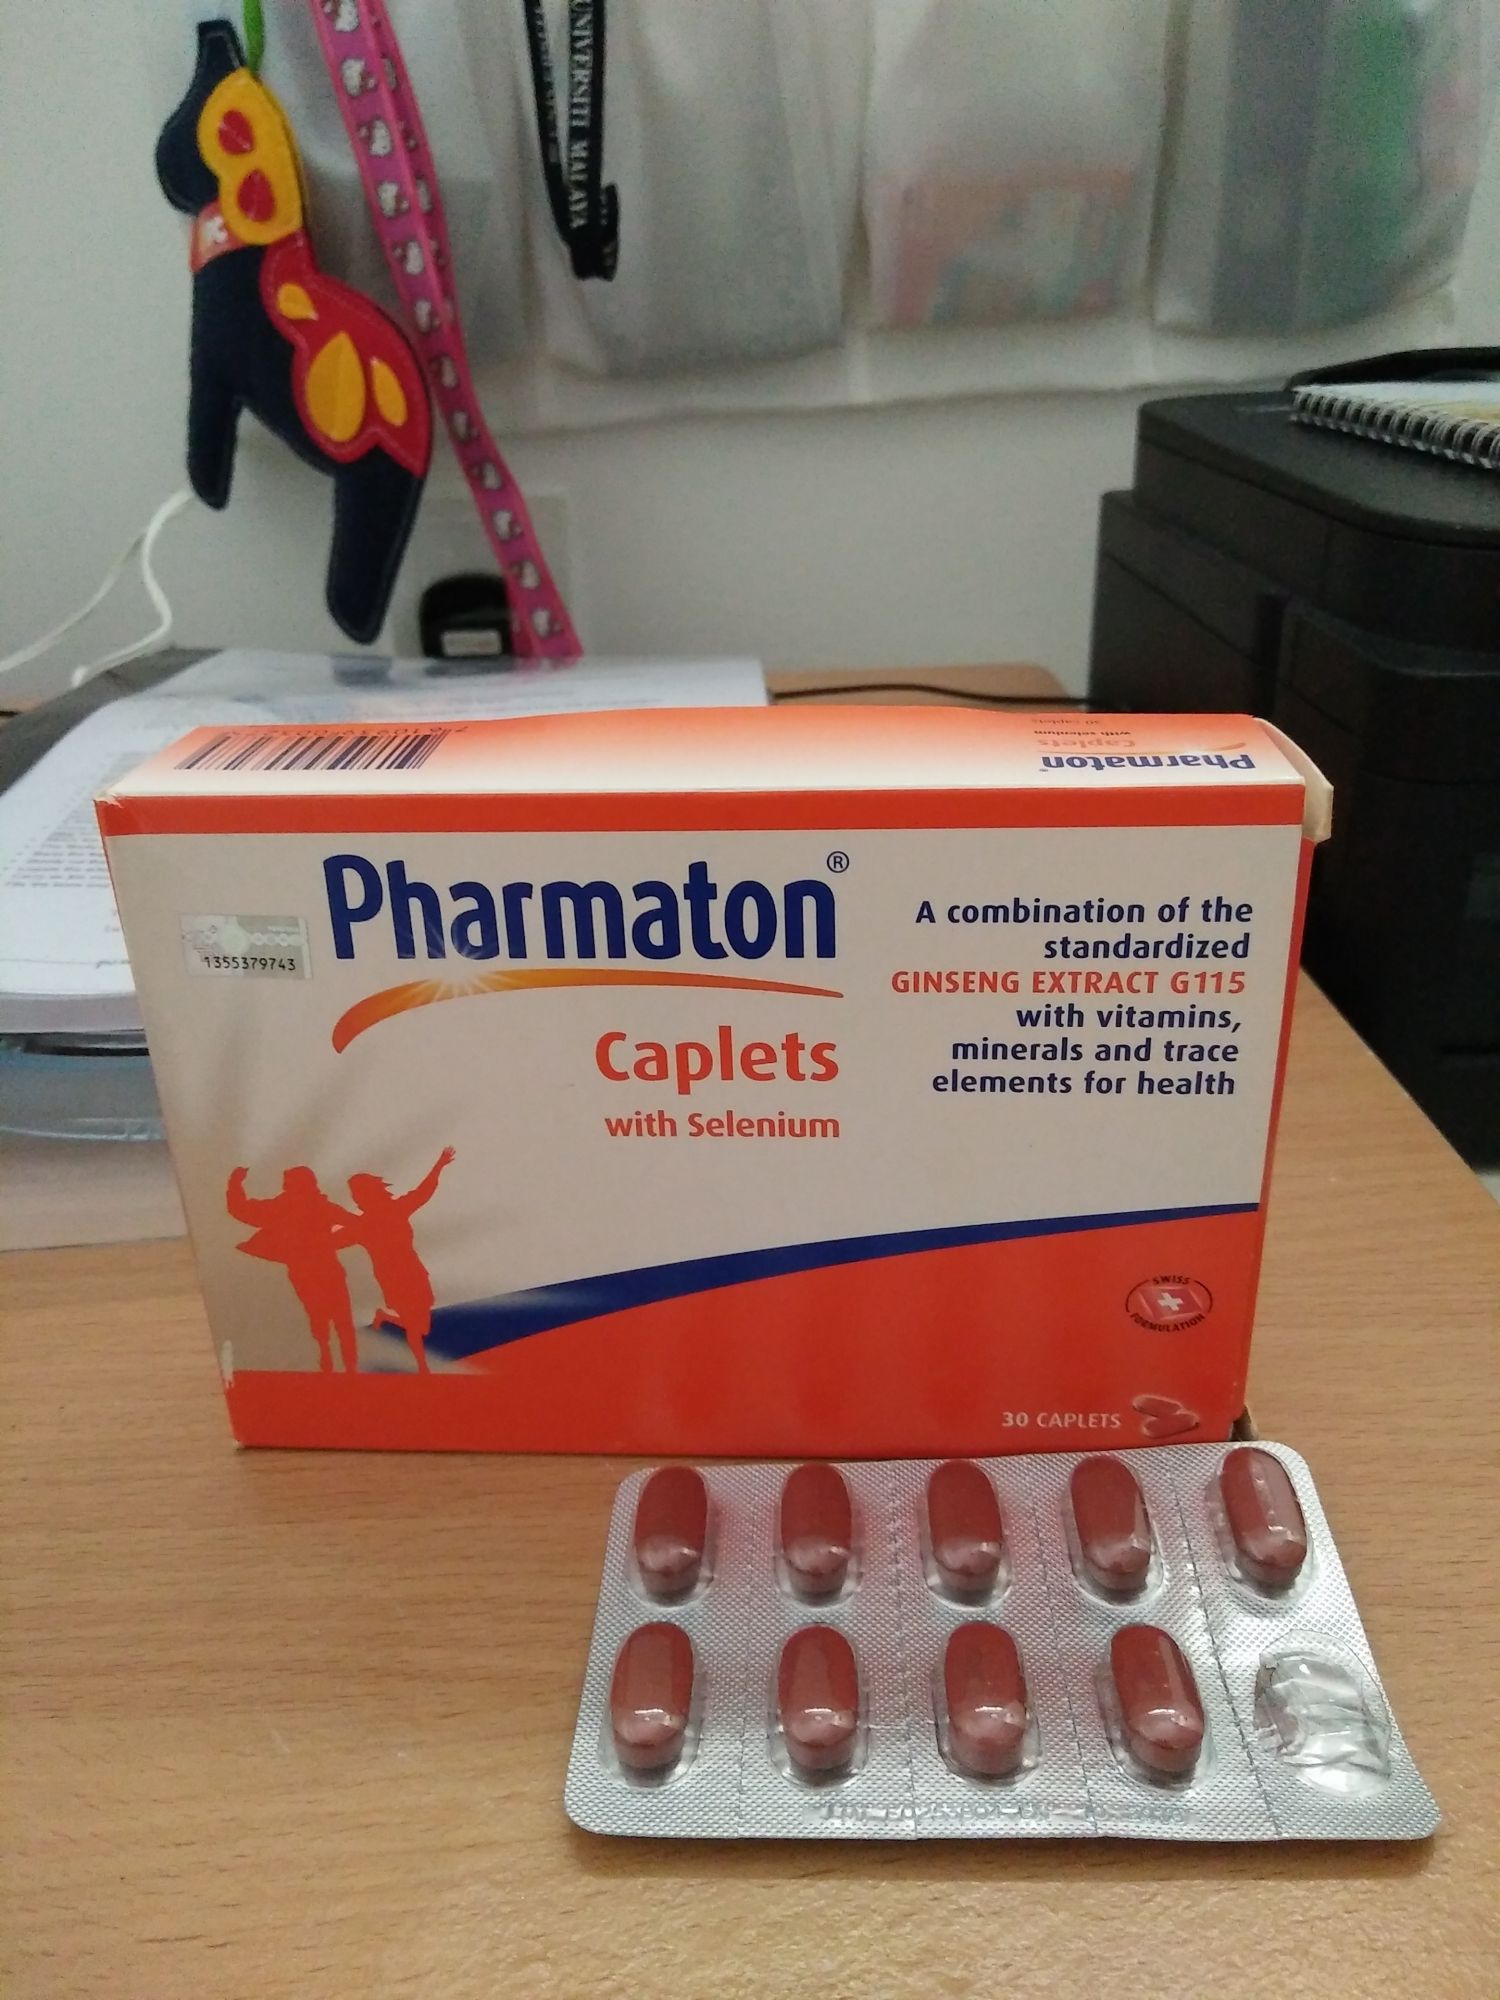 Pharmaton capsules with selenium